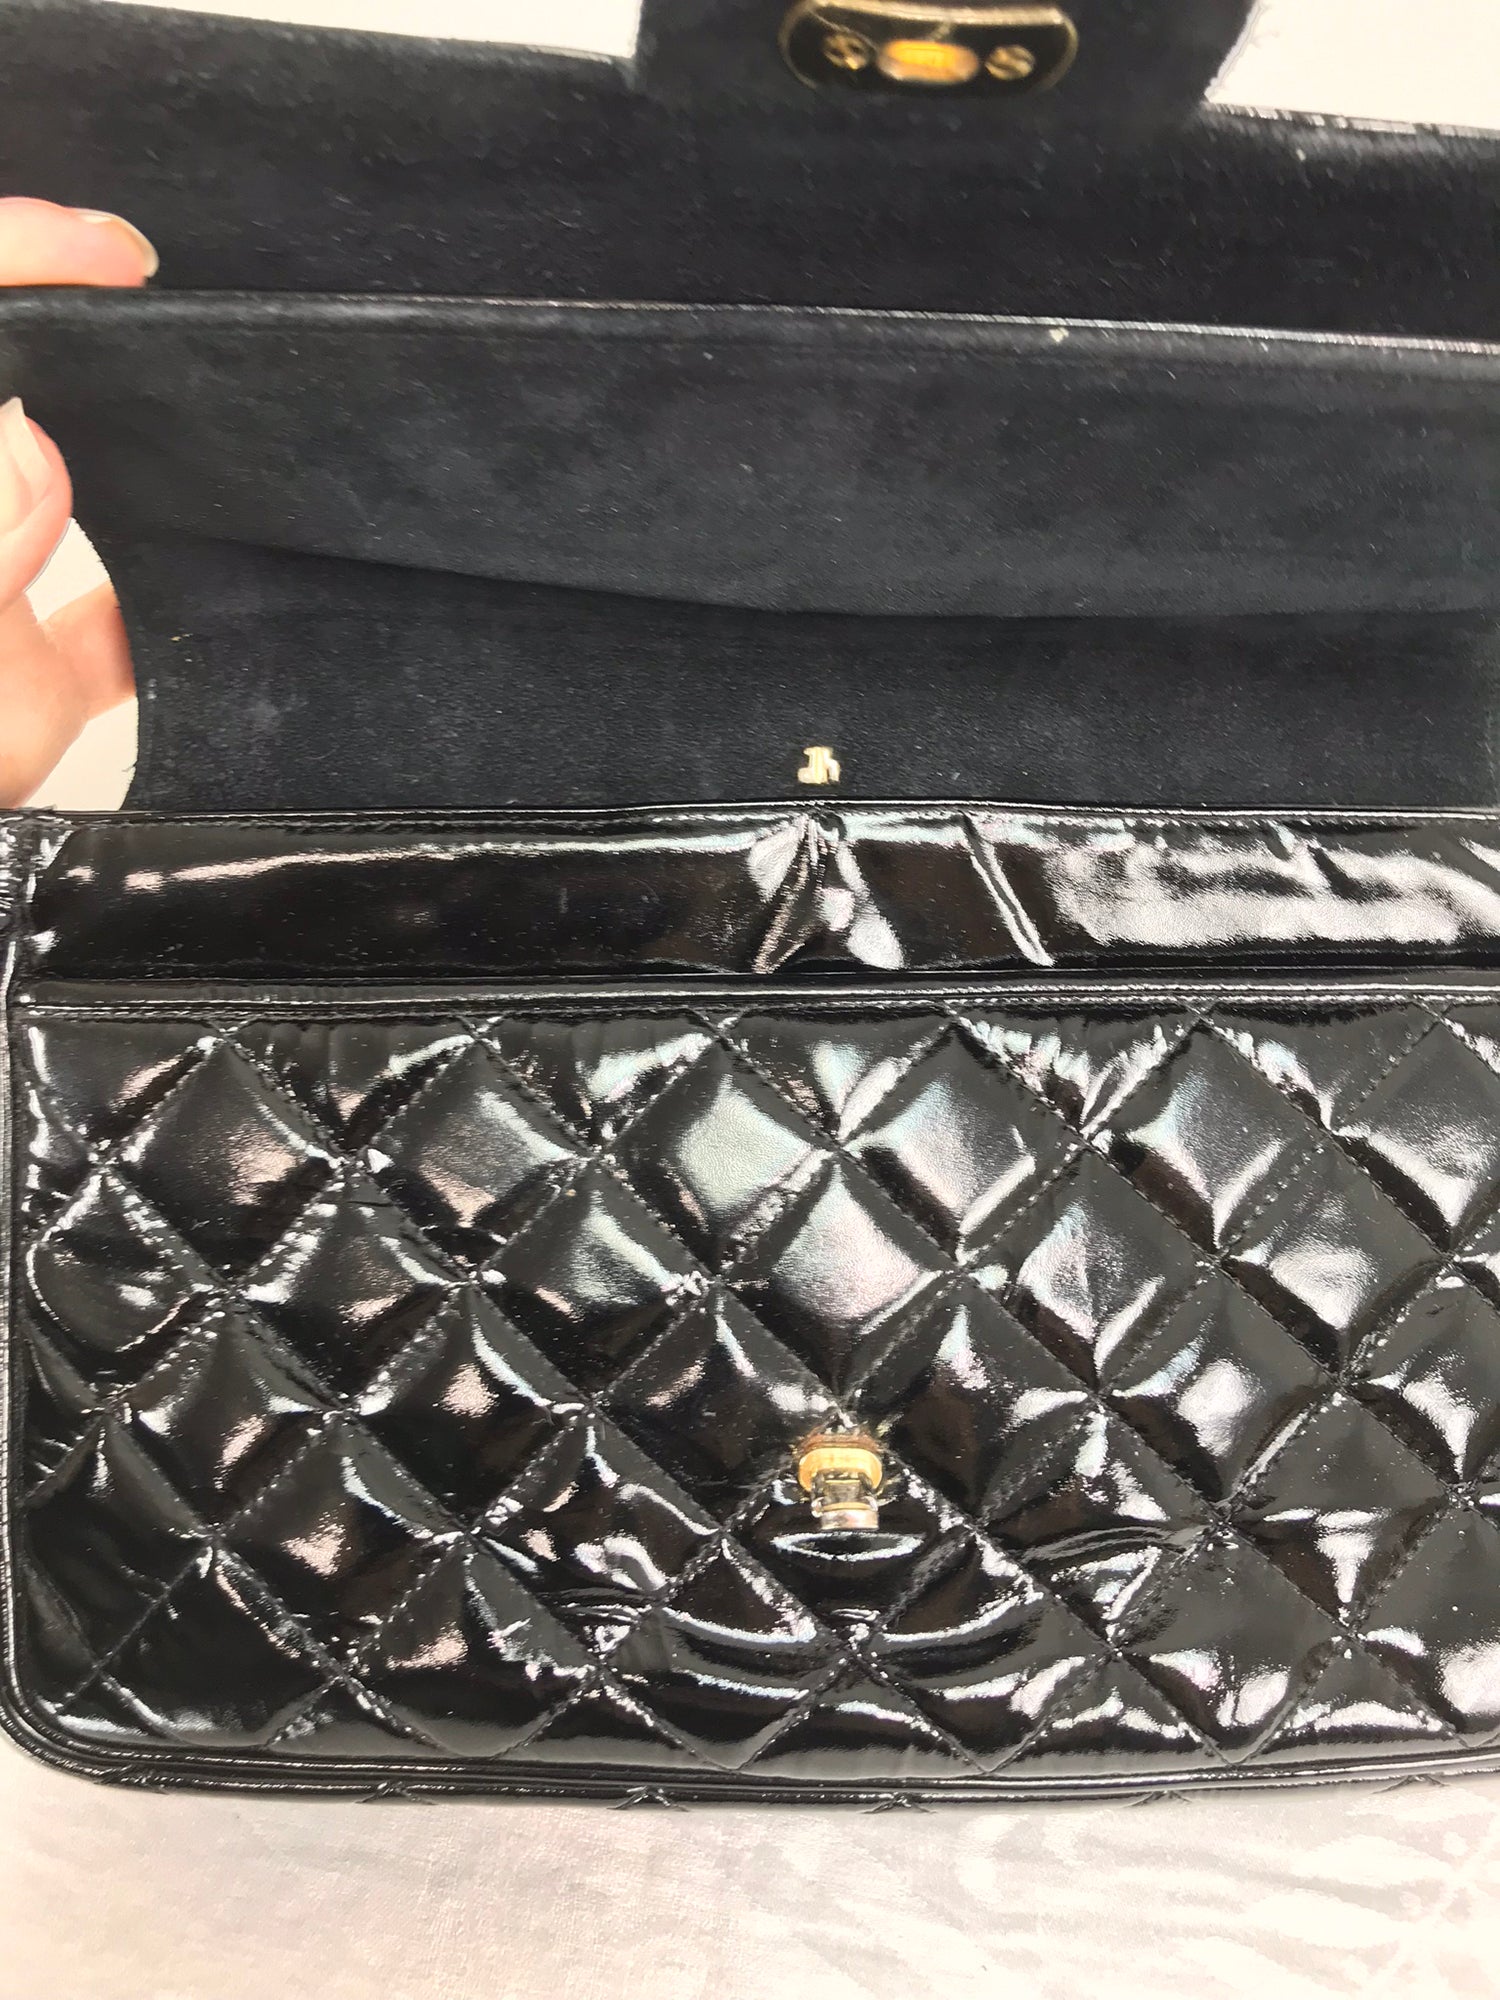 Block Vintage Patent Leather Handbag